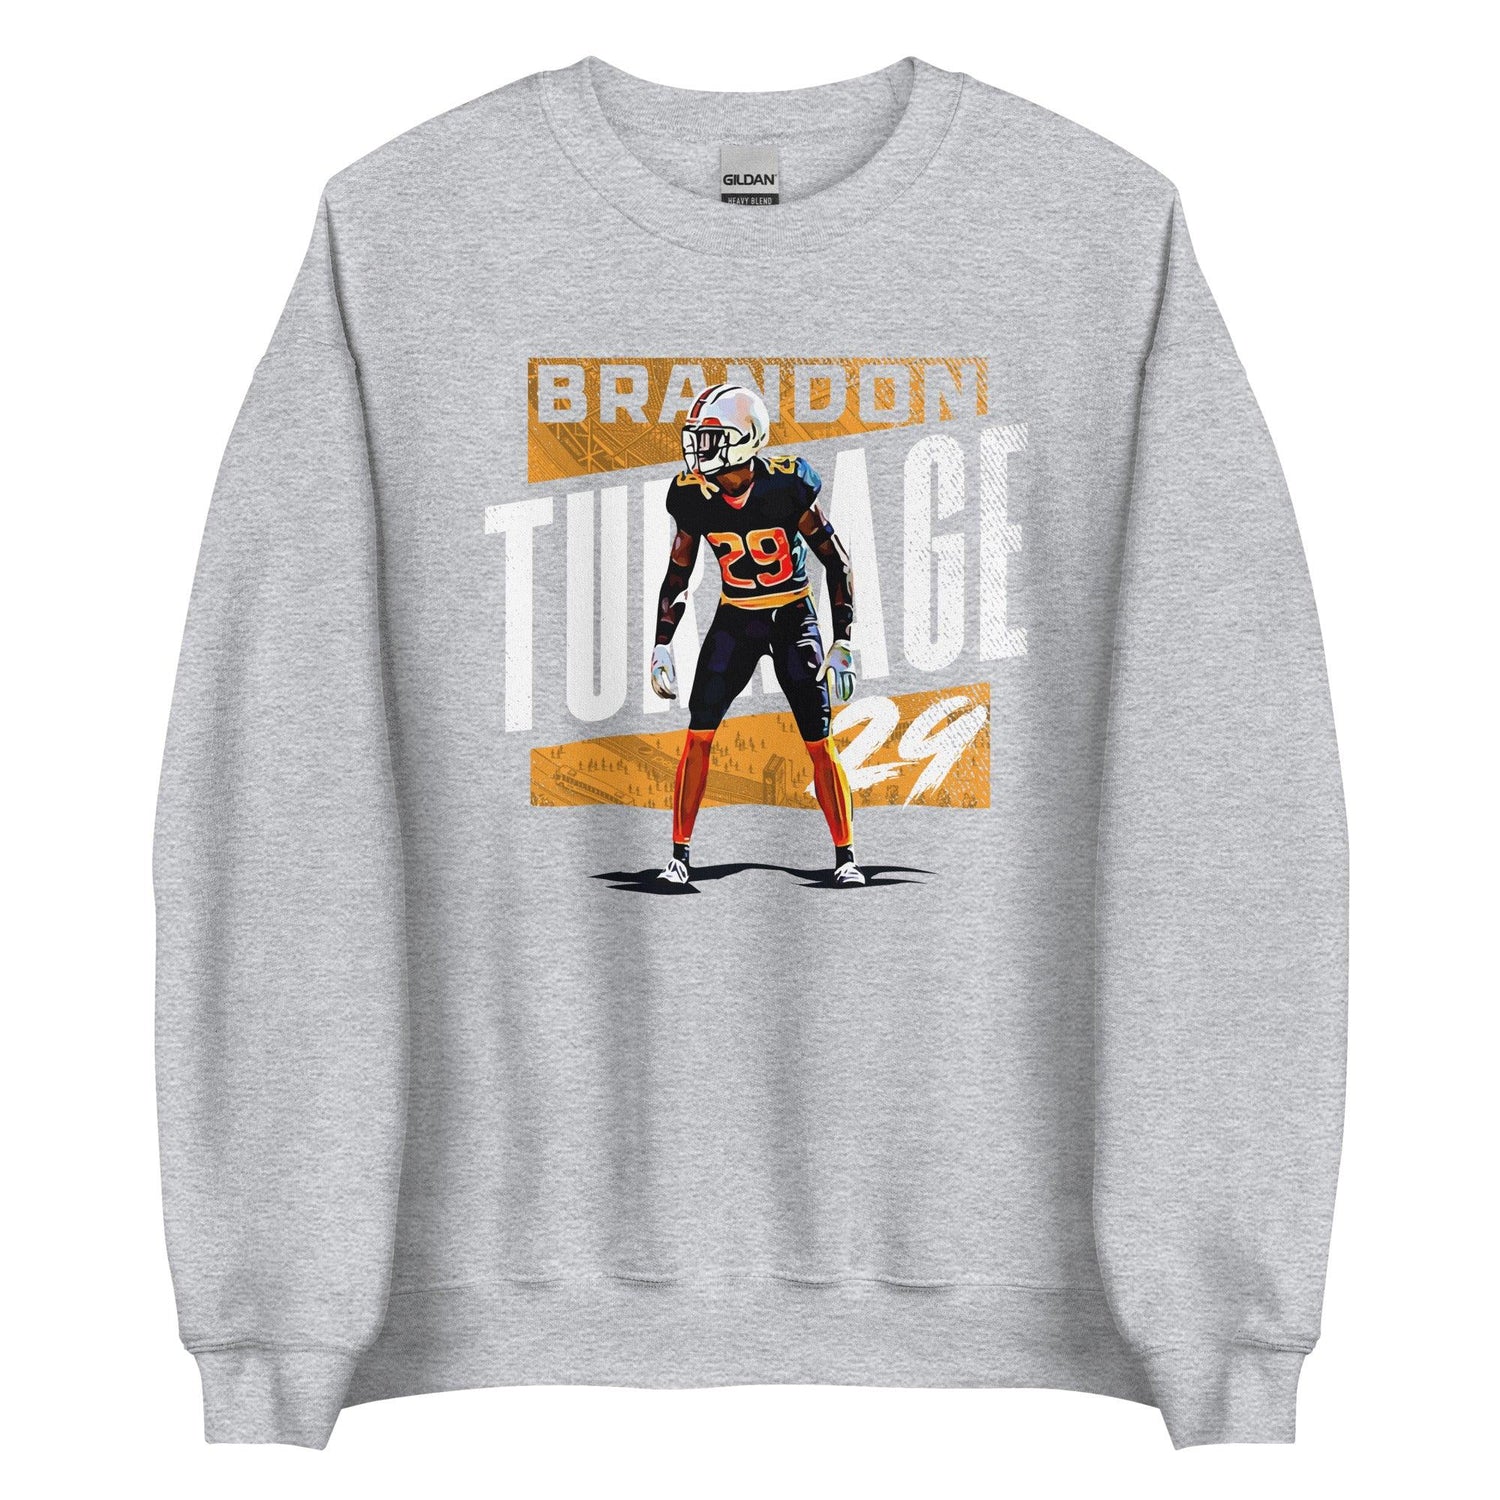 Brandon Turnage "29" Sweatshirt - Fan Arch